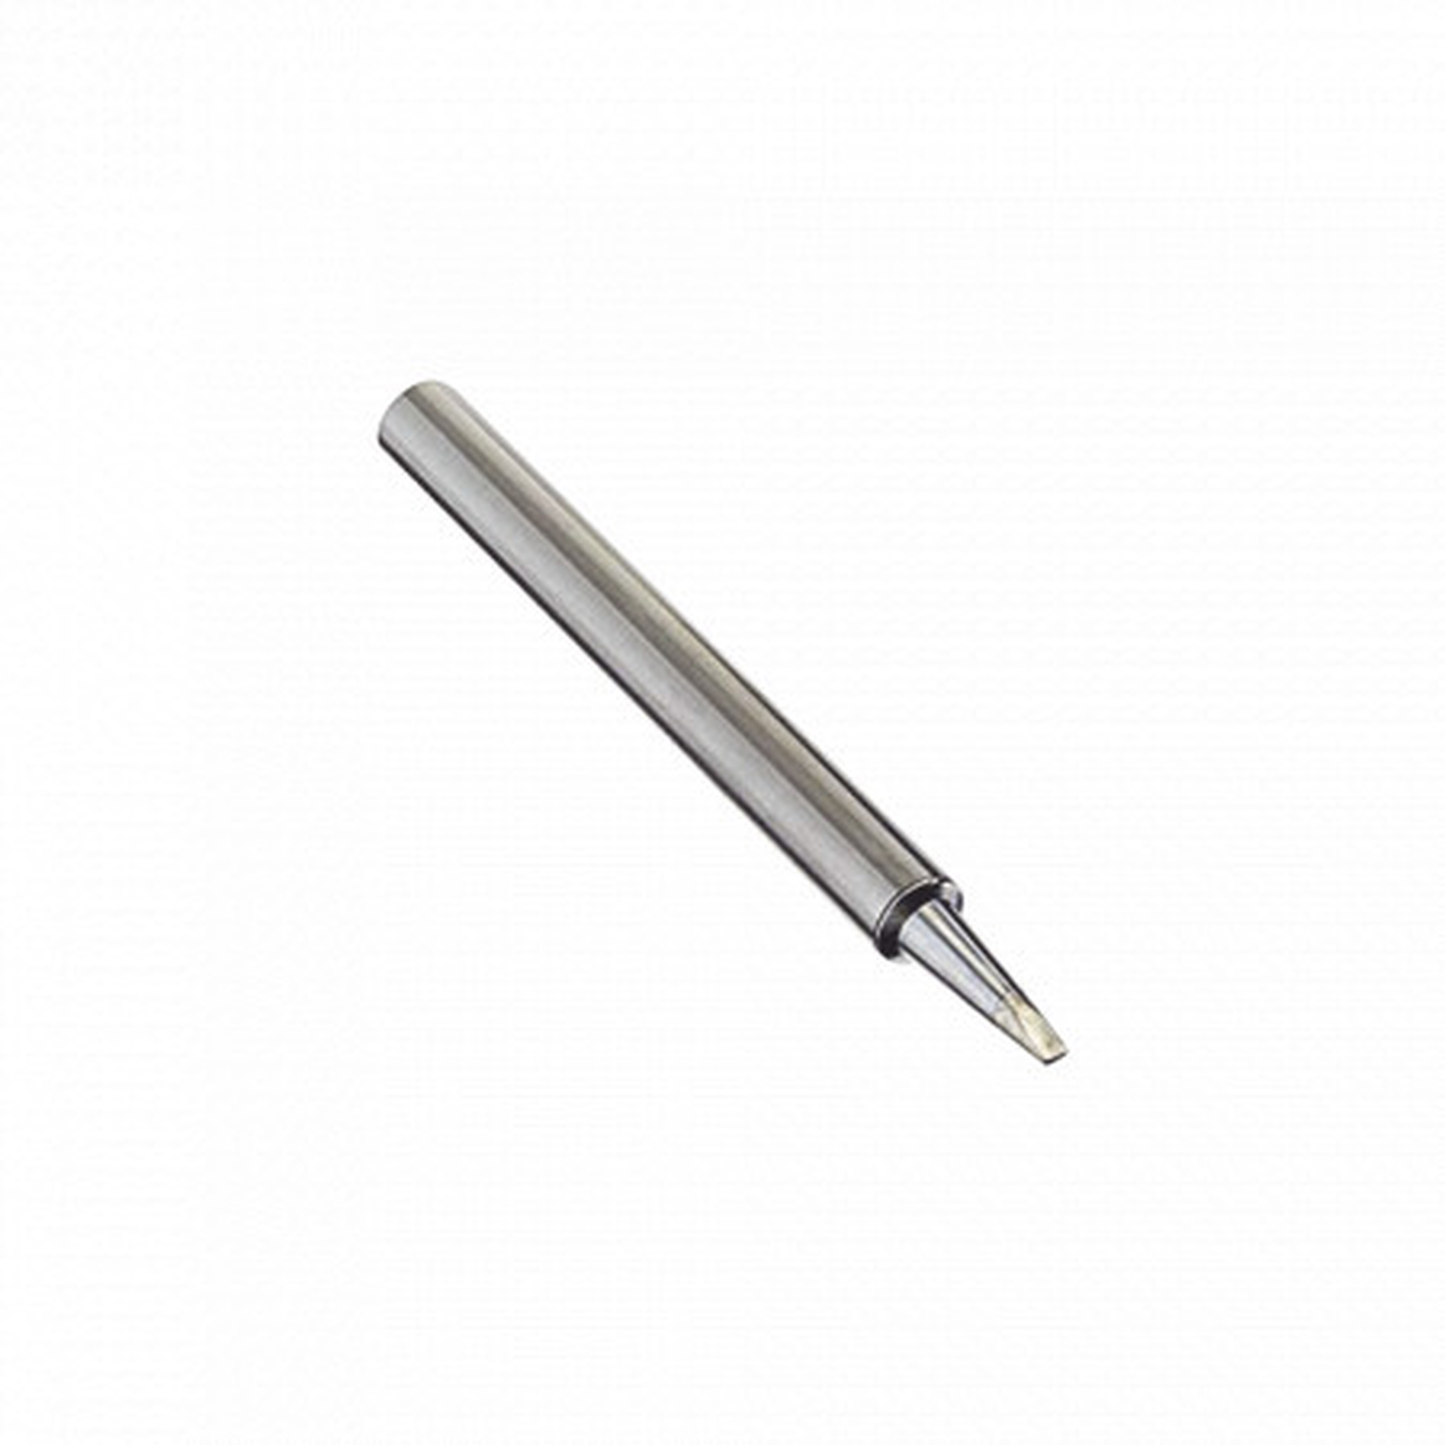 Conical Long Solder Tip, 0.4 mm (0.016") for PS-900 Soldering System.